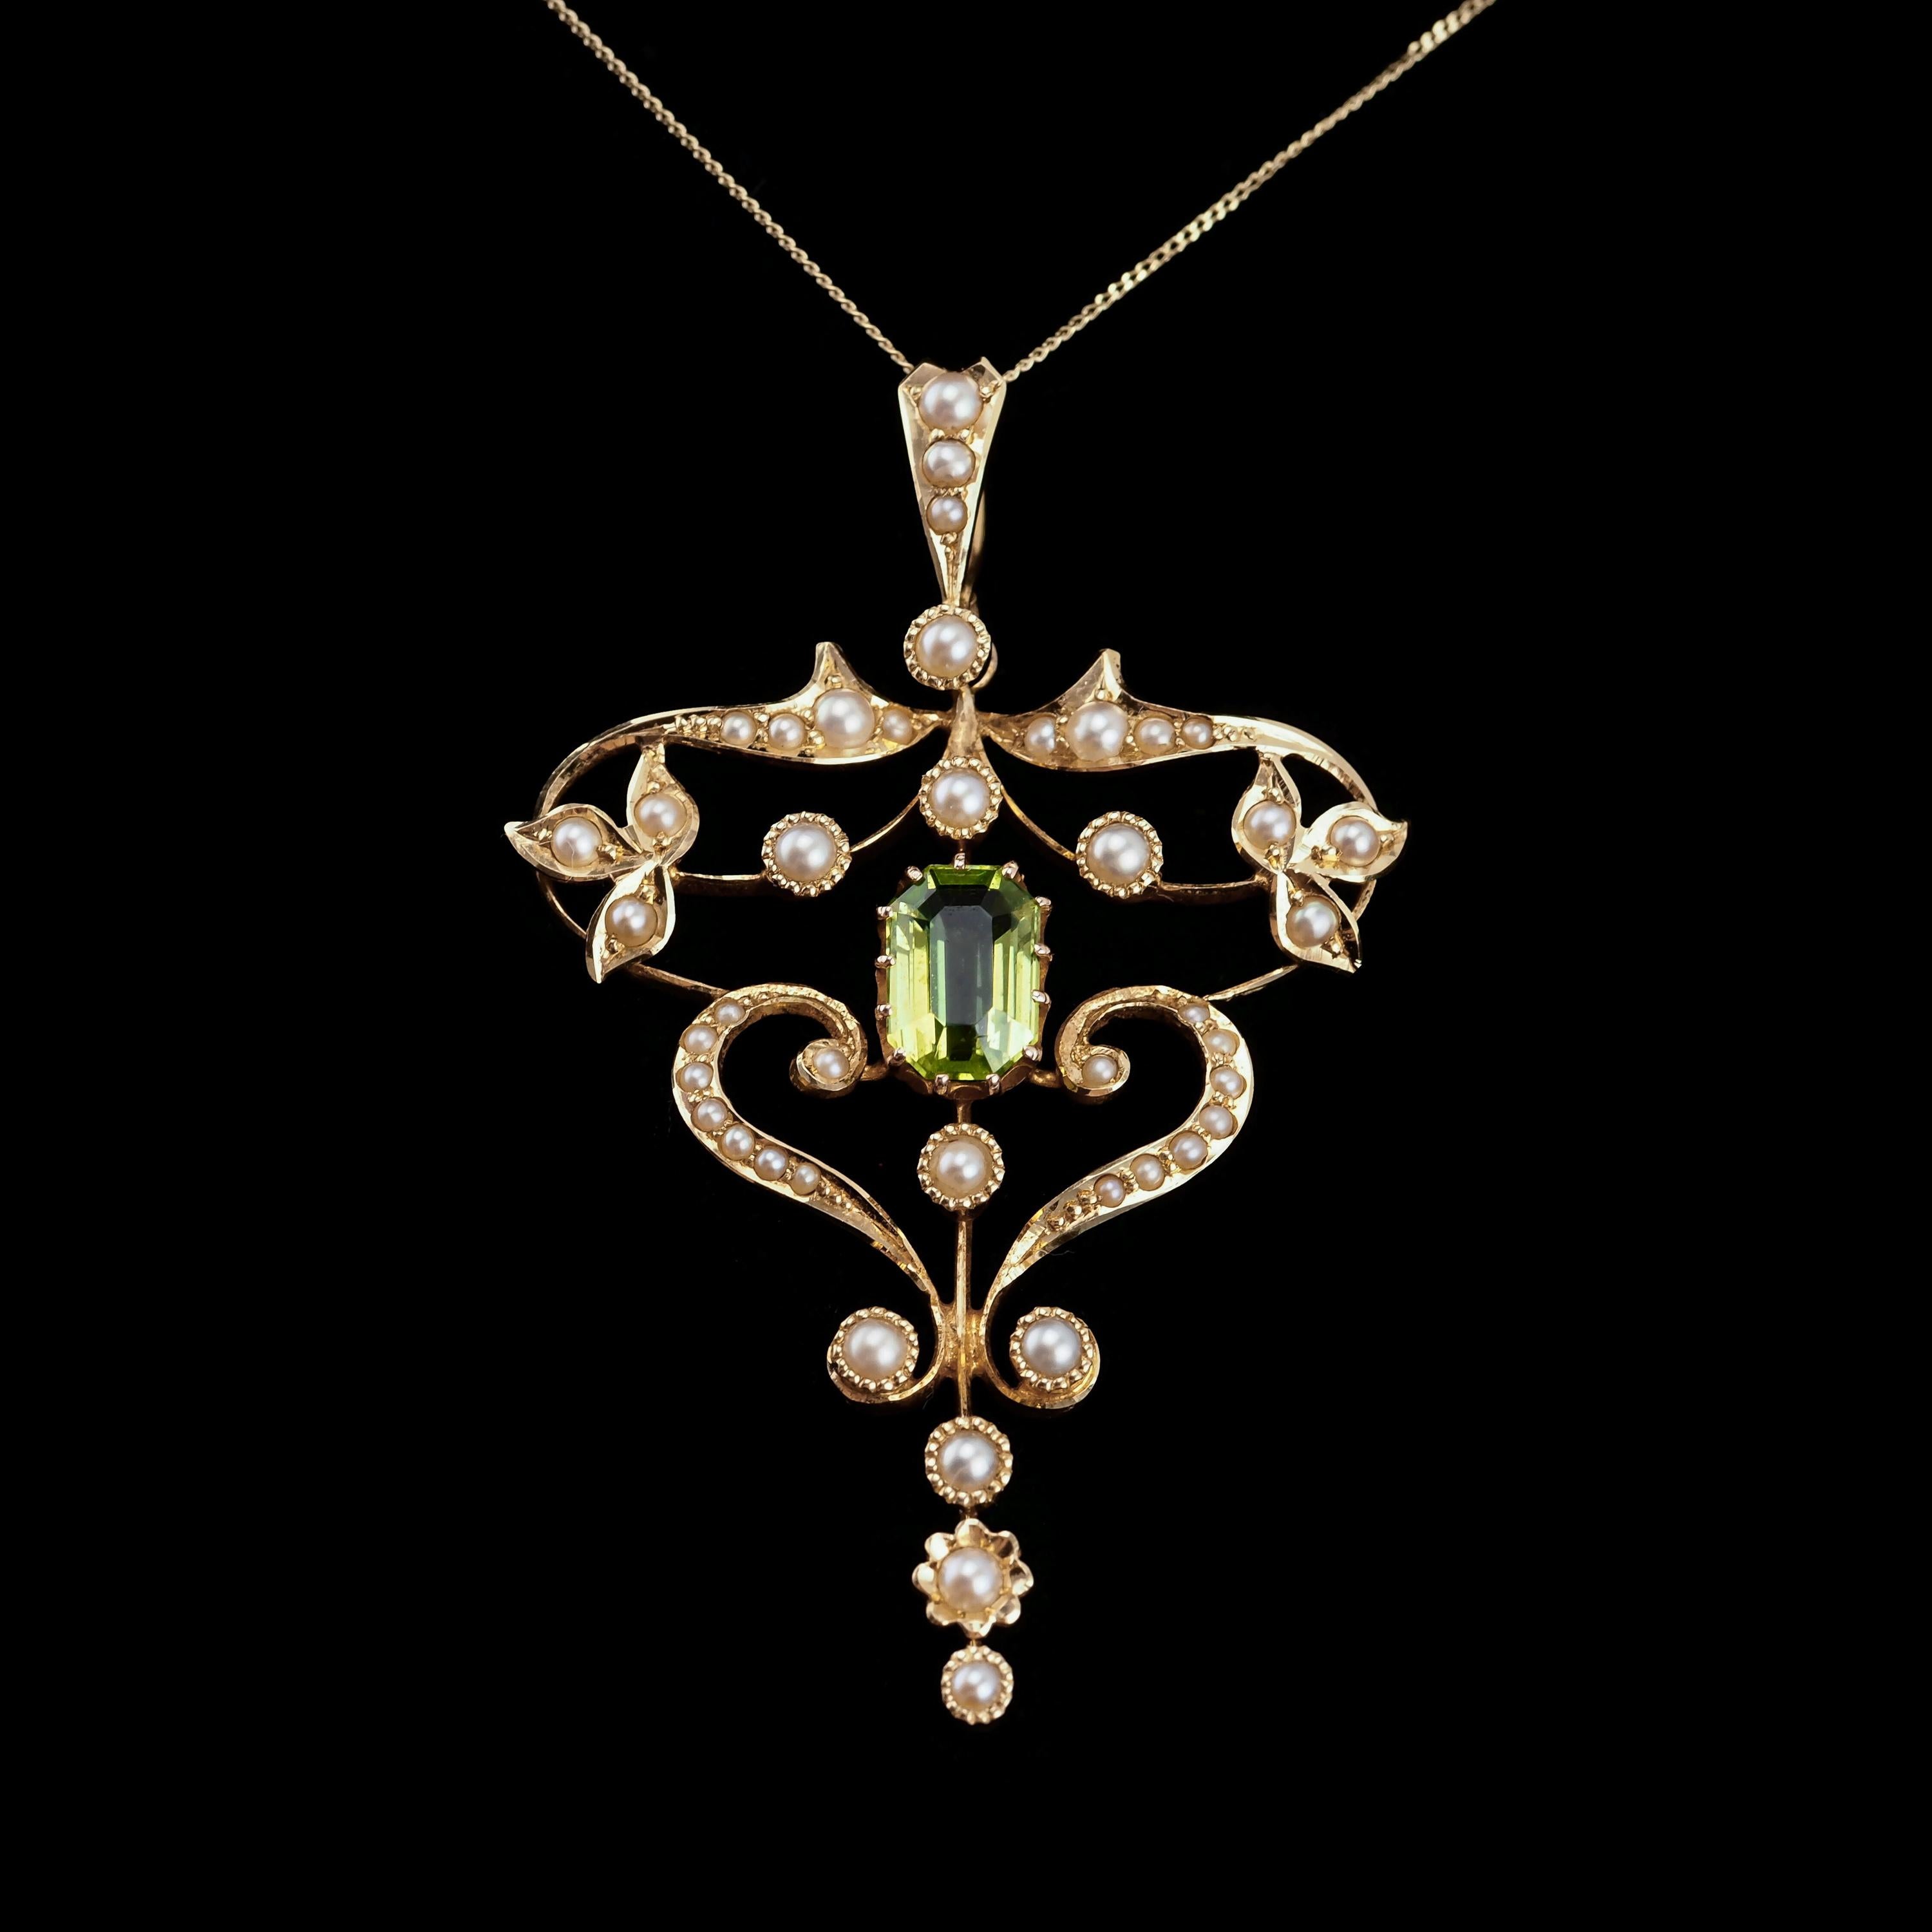 Antique Edwardian 15K Gold Peridot & Pearl Necklace/Pendant - c.1910 2